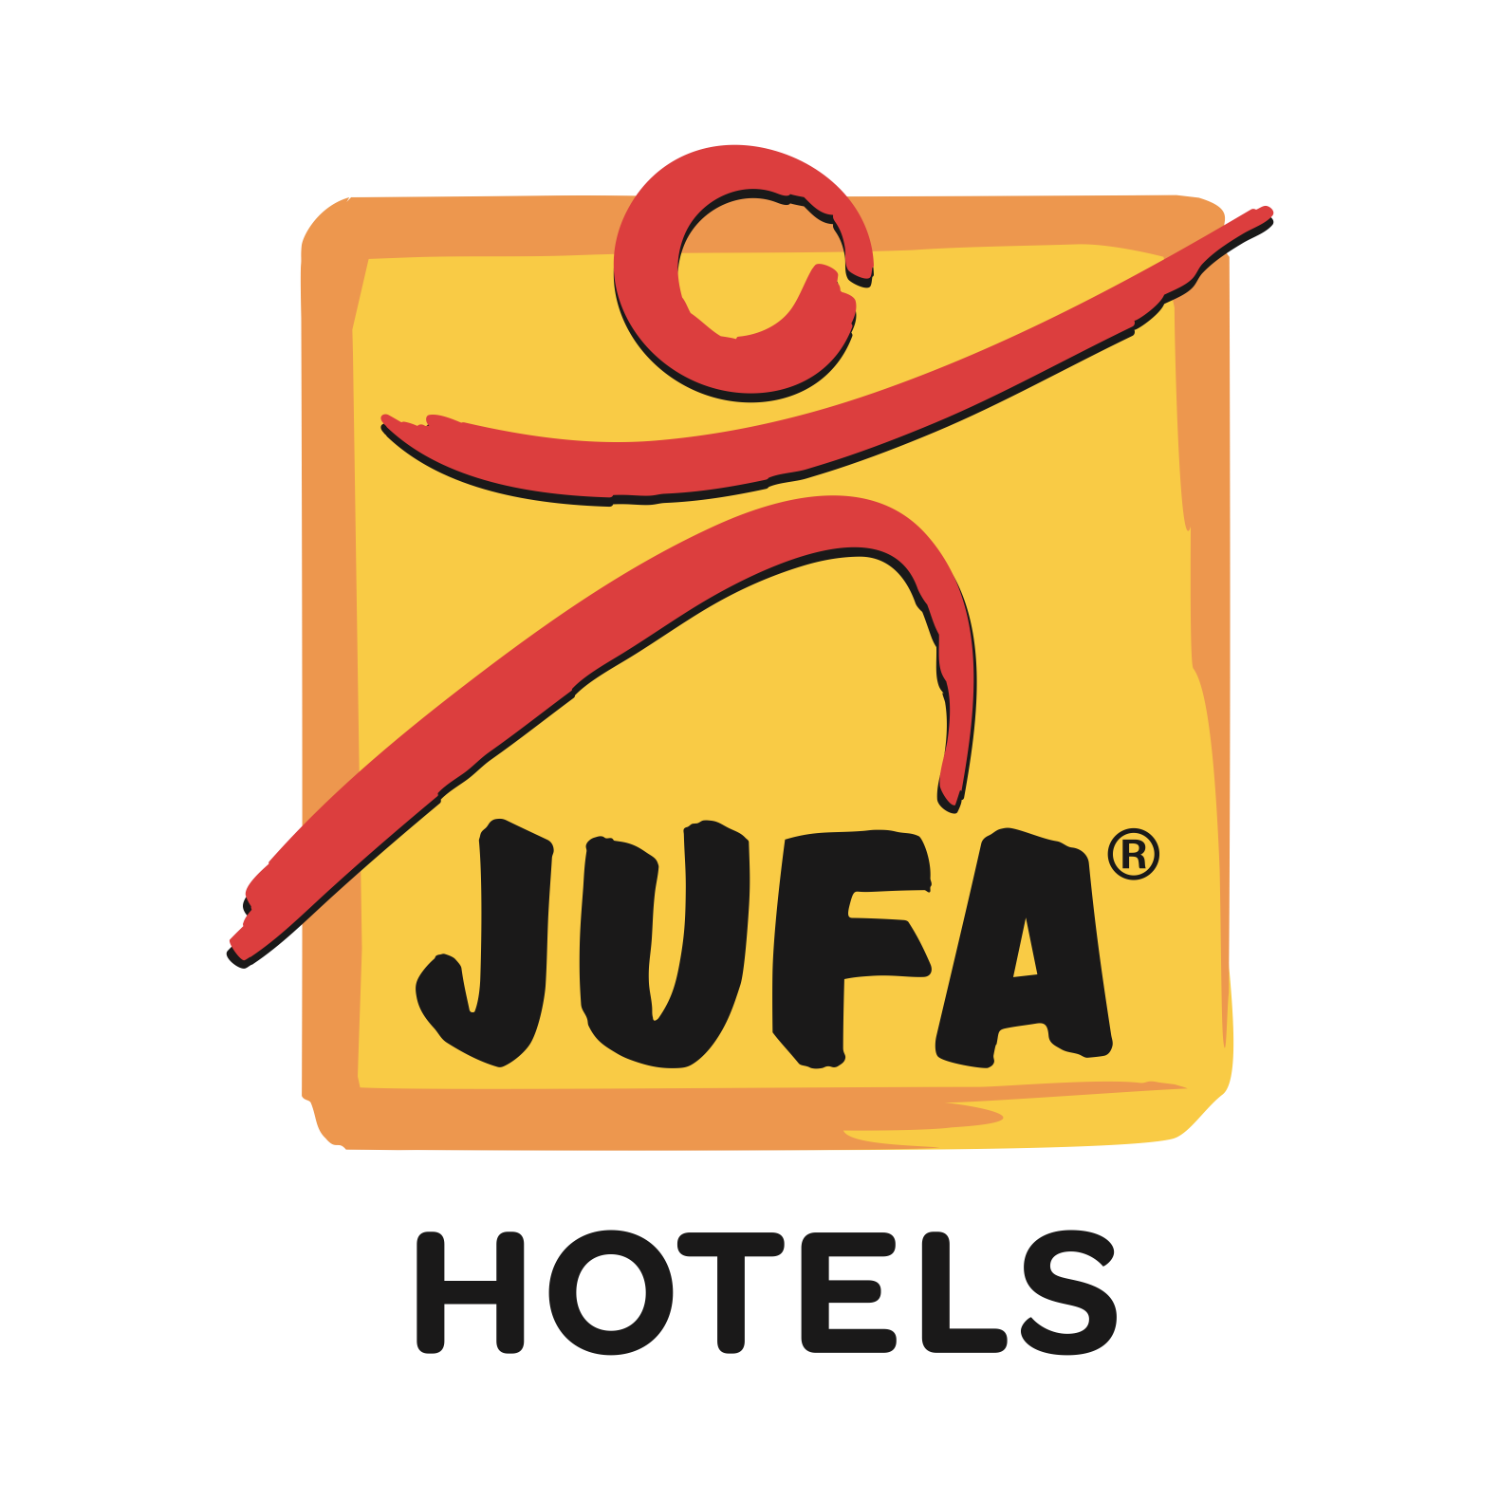 JUFA Hotels